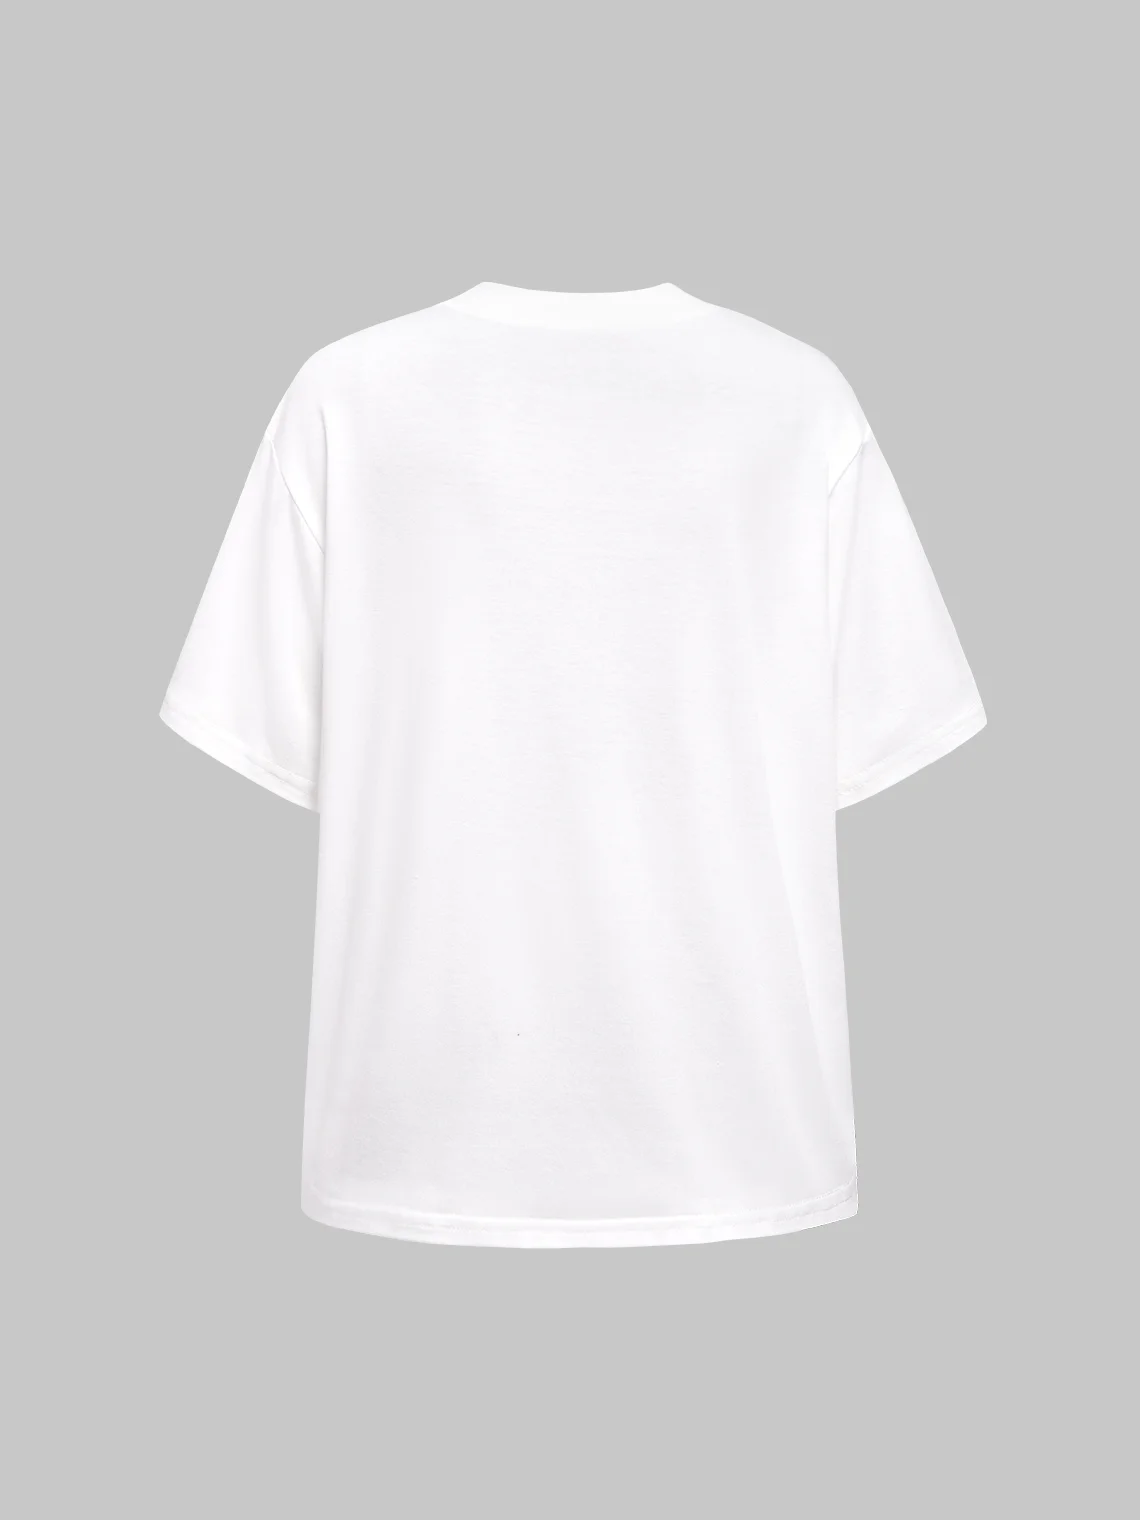 Street White Figure print Top T-Shirt